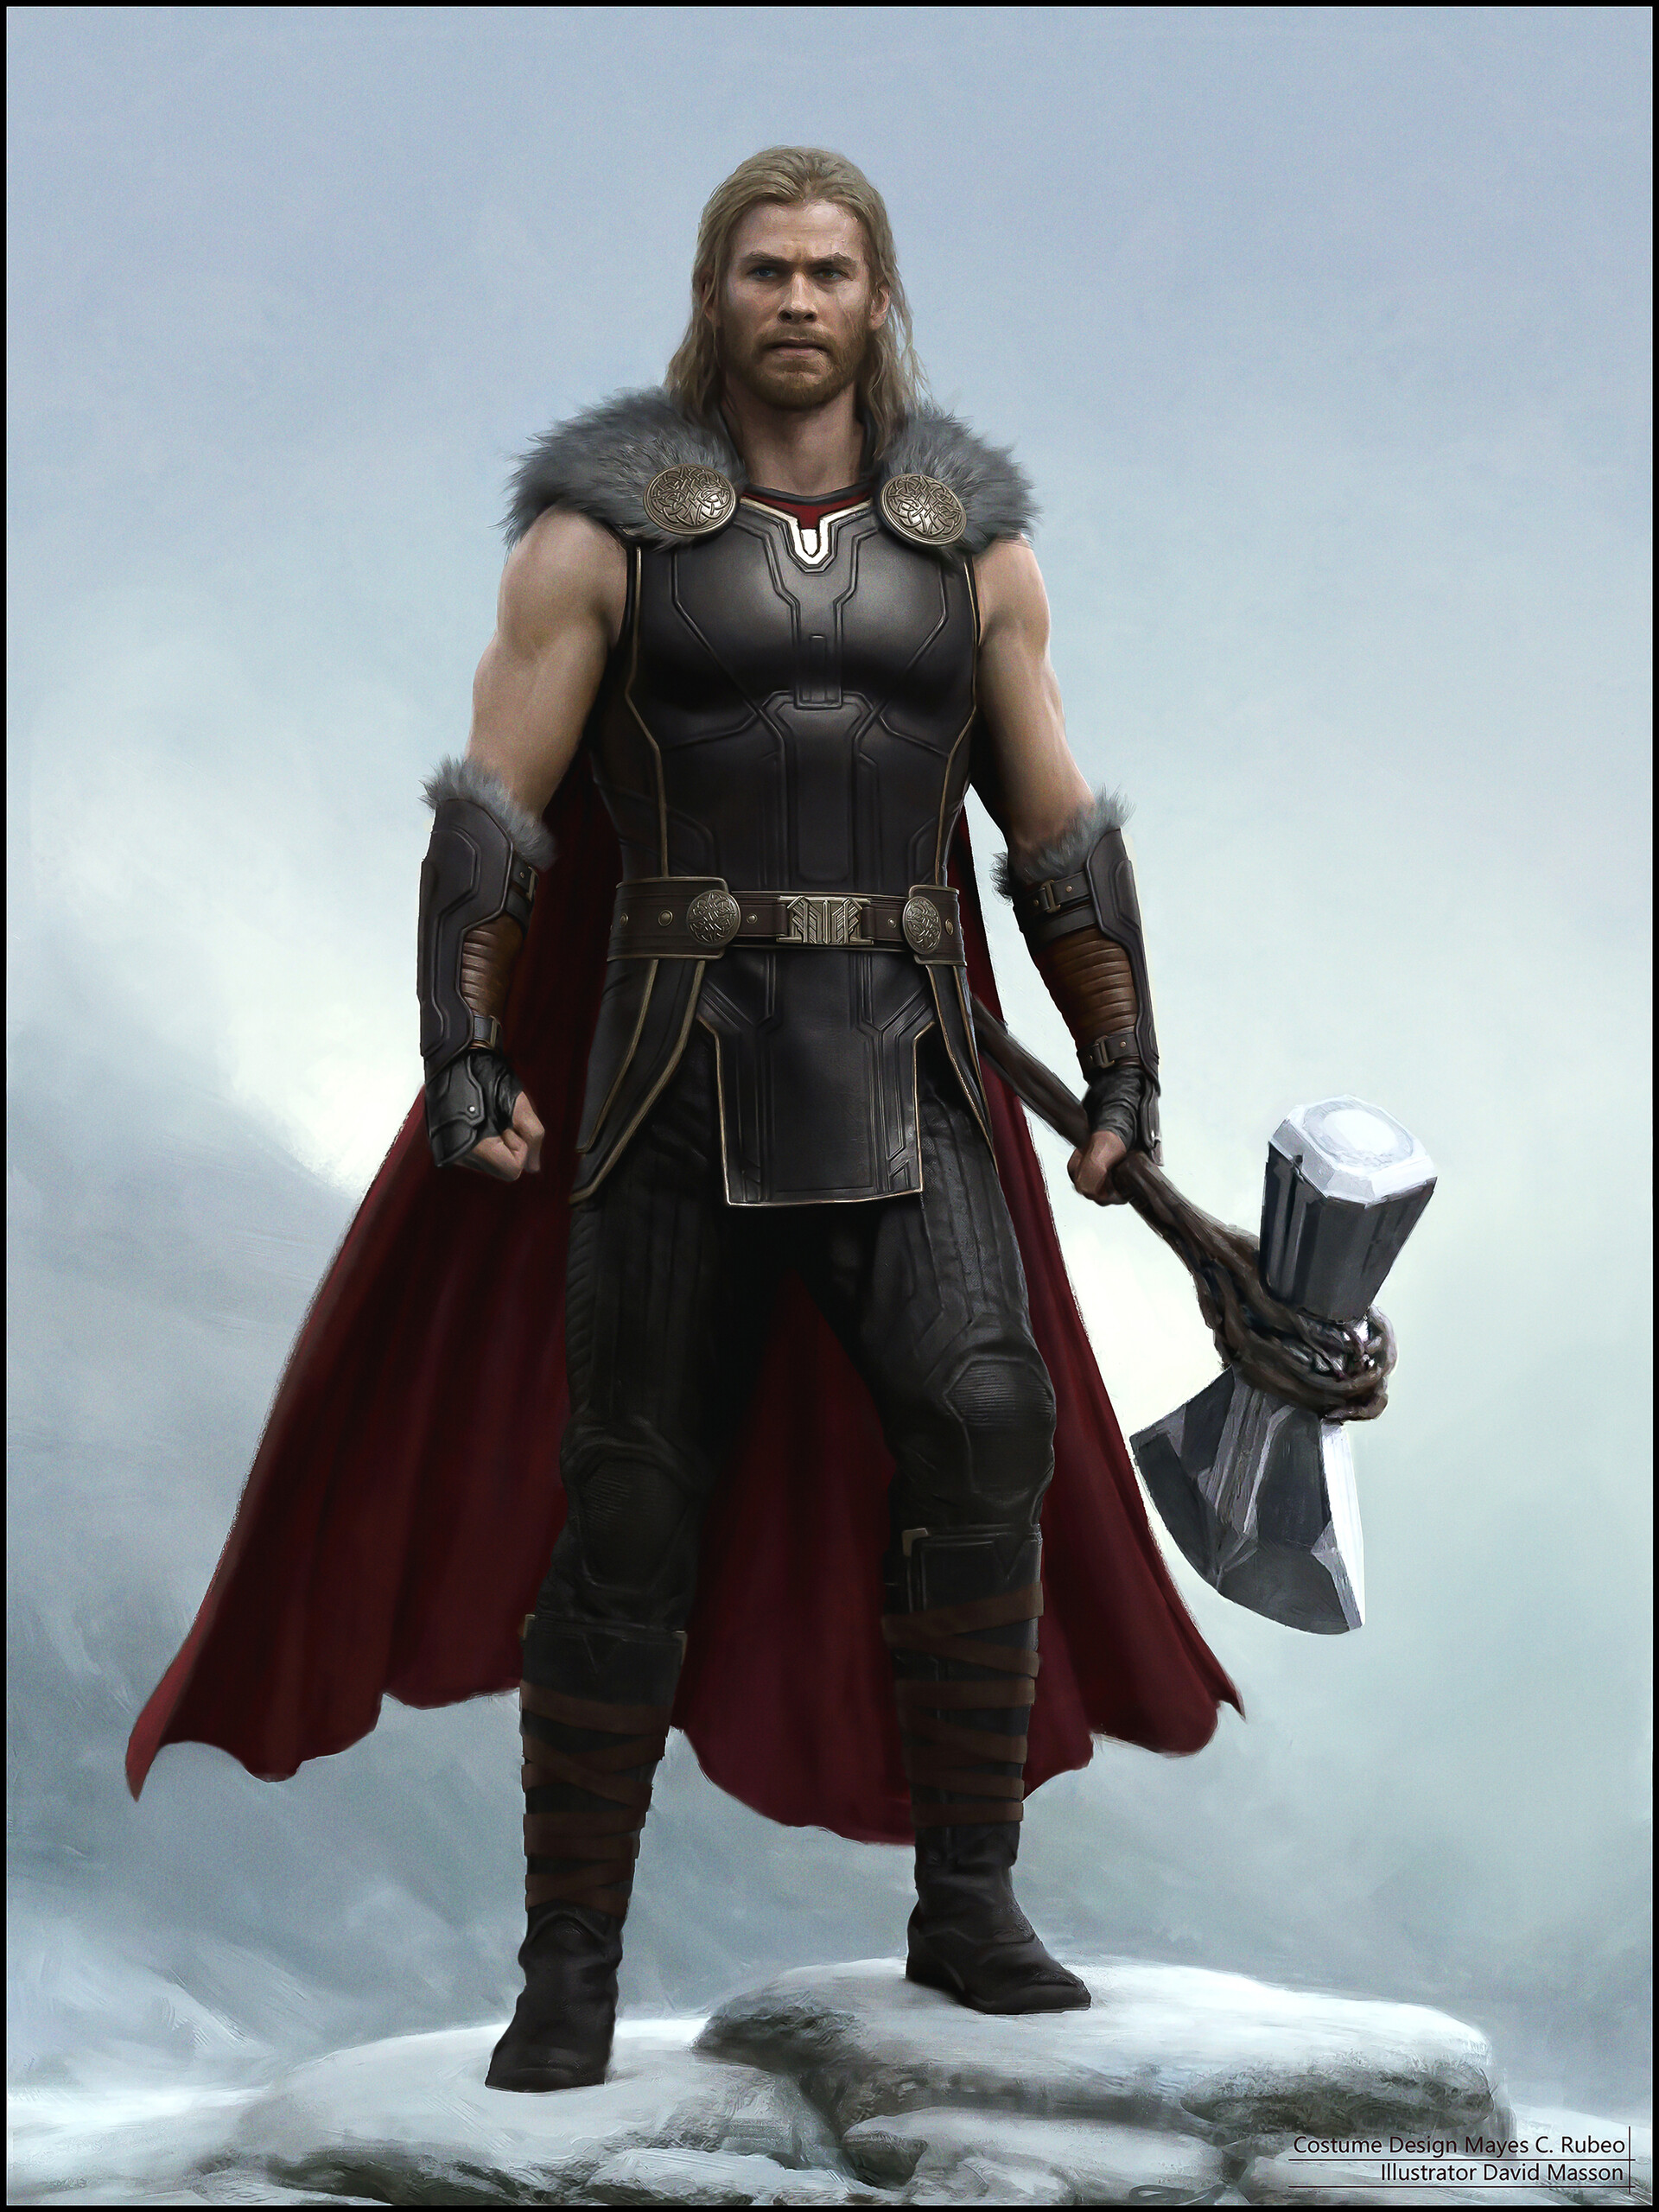 DAVID MASSON SAN GABRIEL - Starlord Thor Love and Thunder